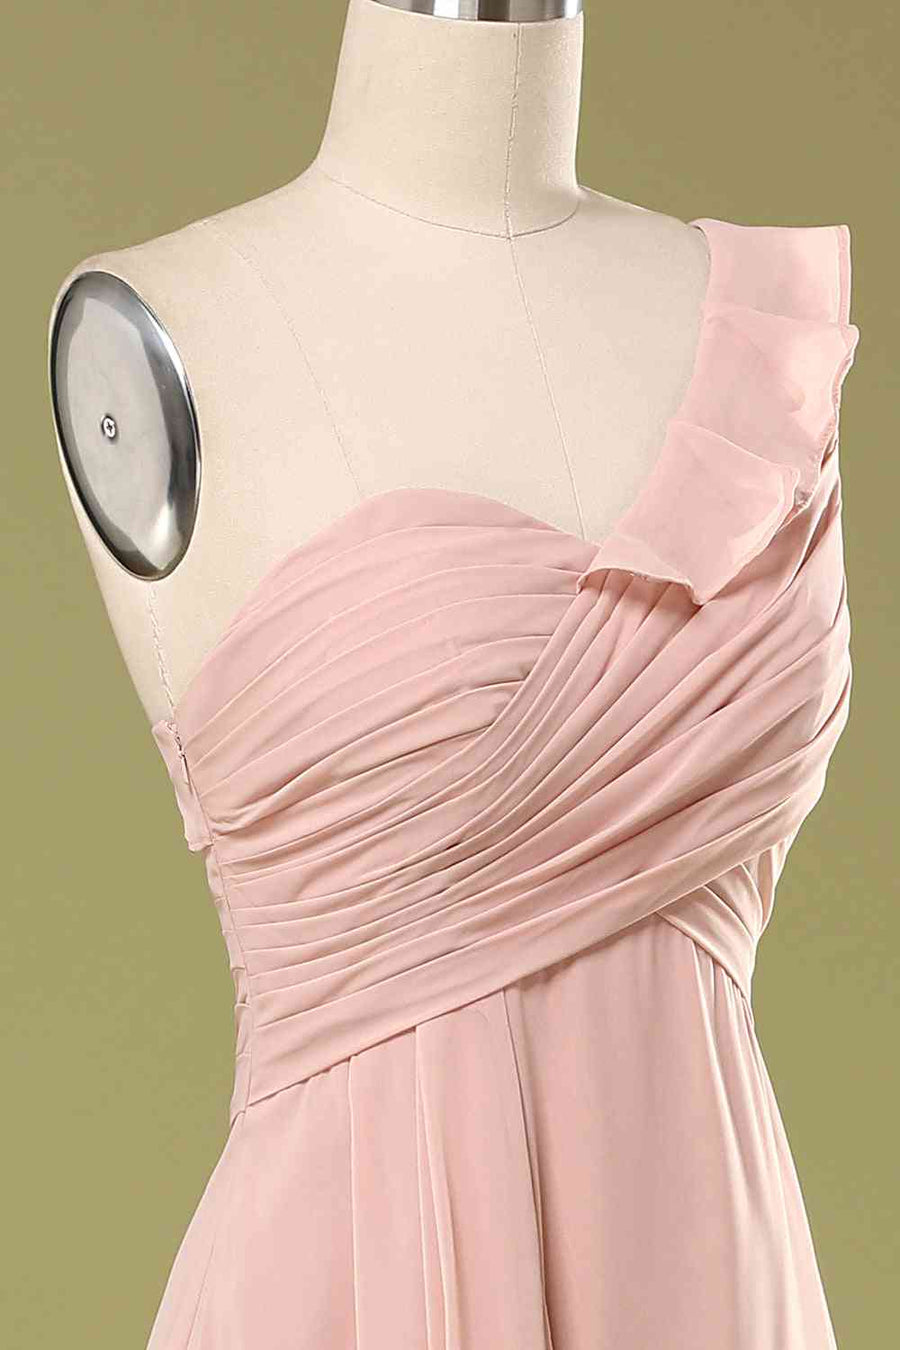 Blush Chiffon One-Shoulder Ruffled Bridesmaid Dress